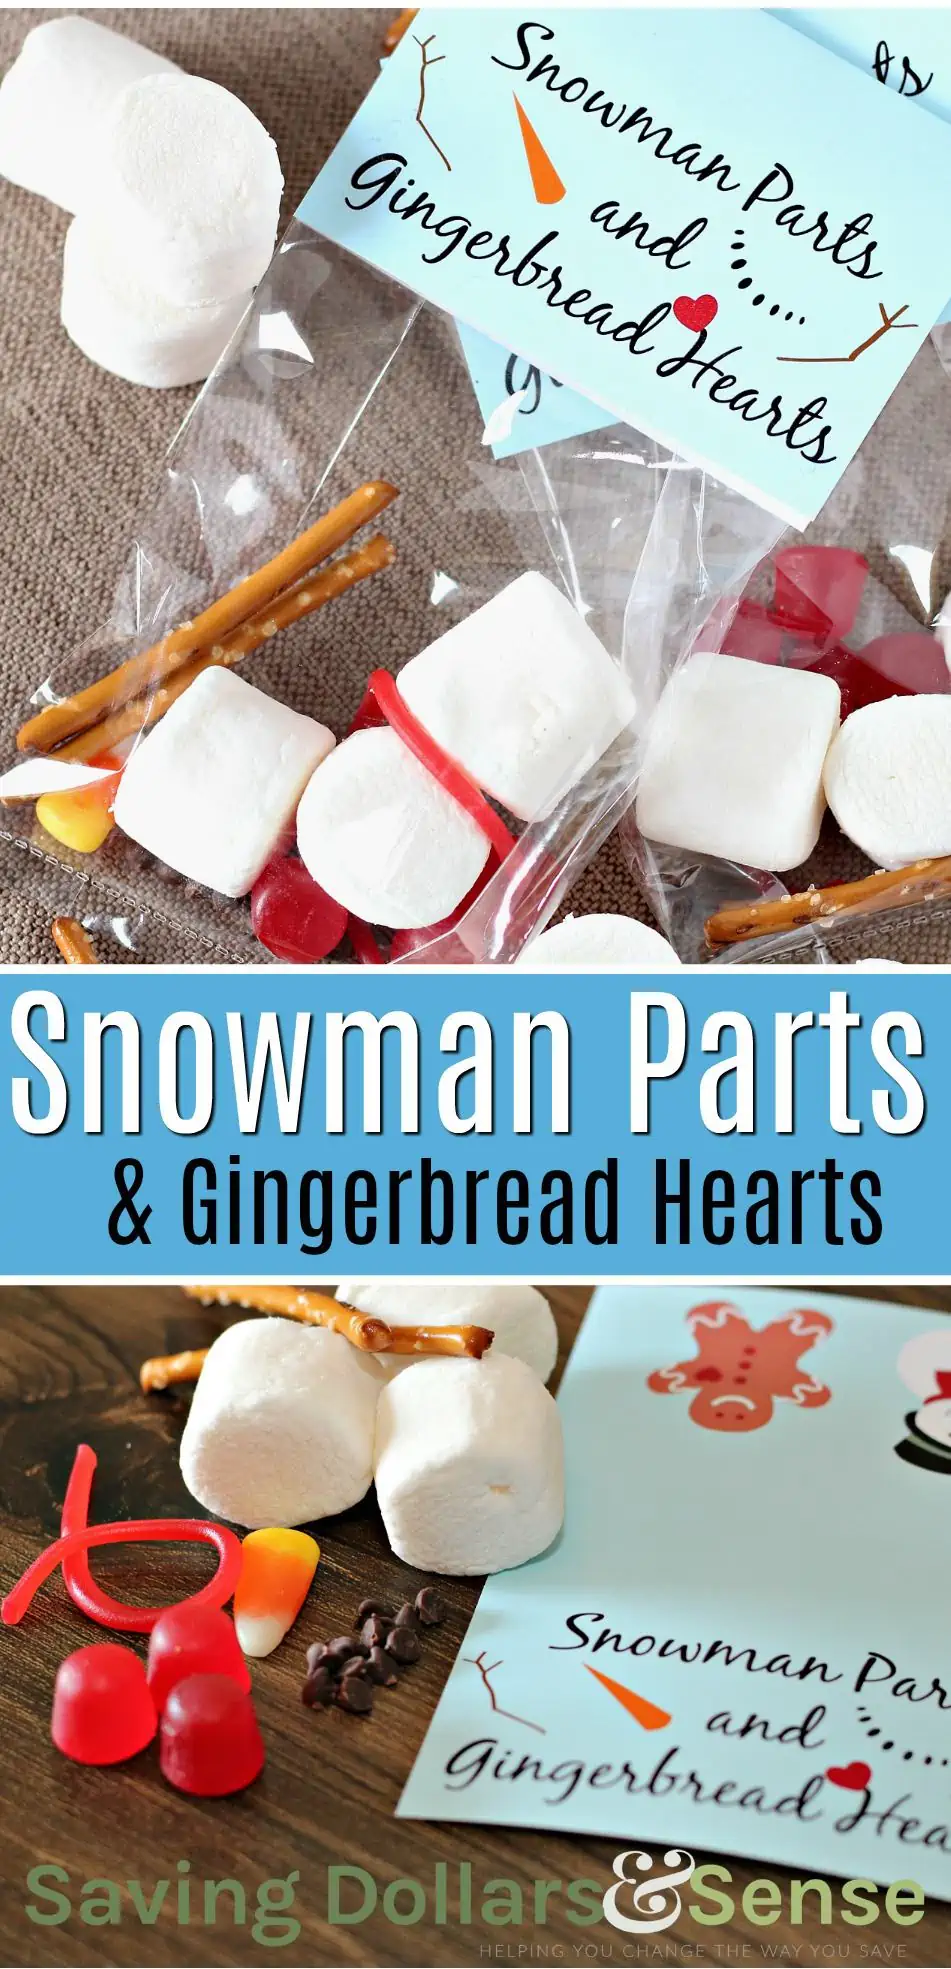 Snowman Parts and Gingerbread Hearts treats.